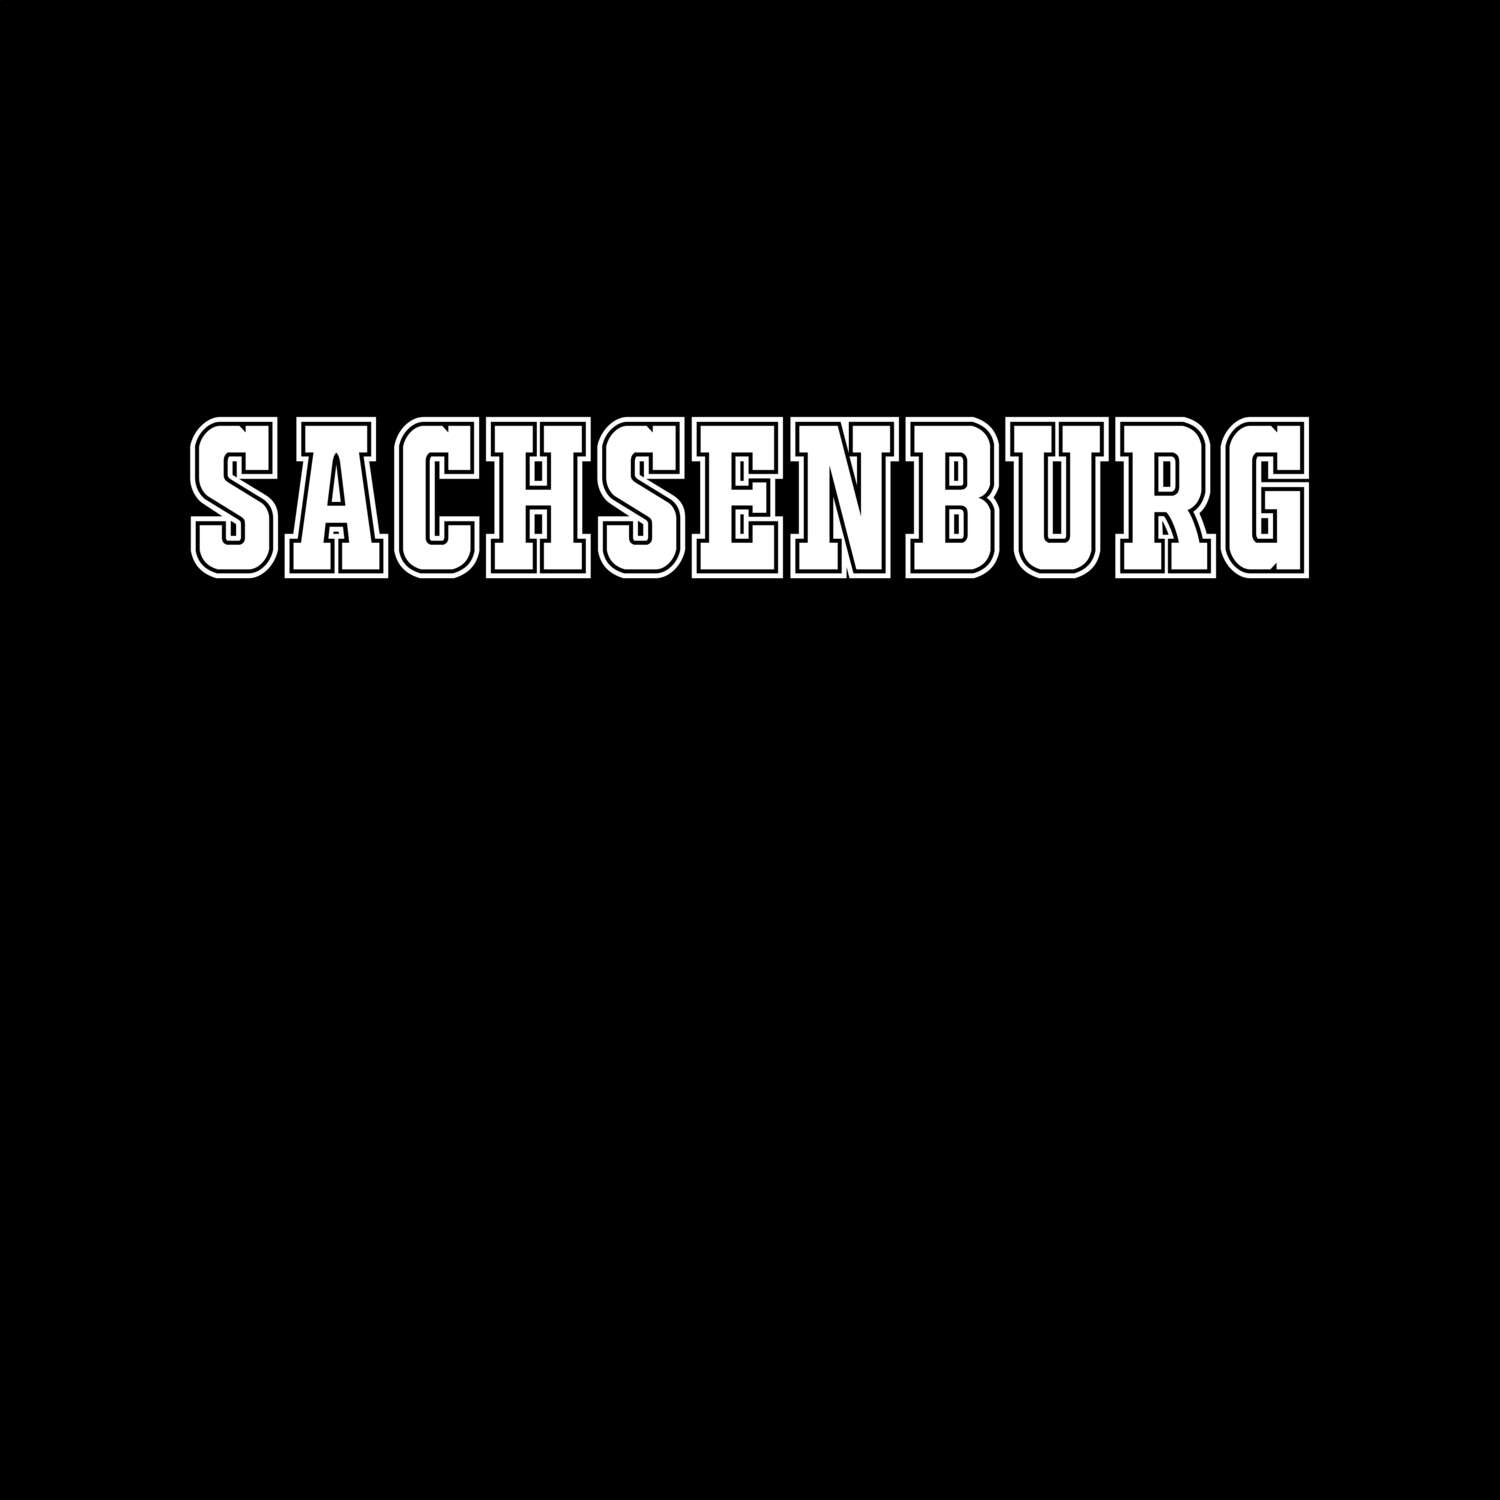 Sachsenburg T-Shirt »Classic«